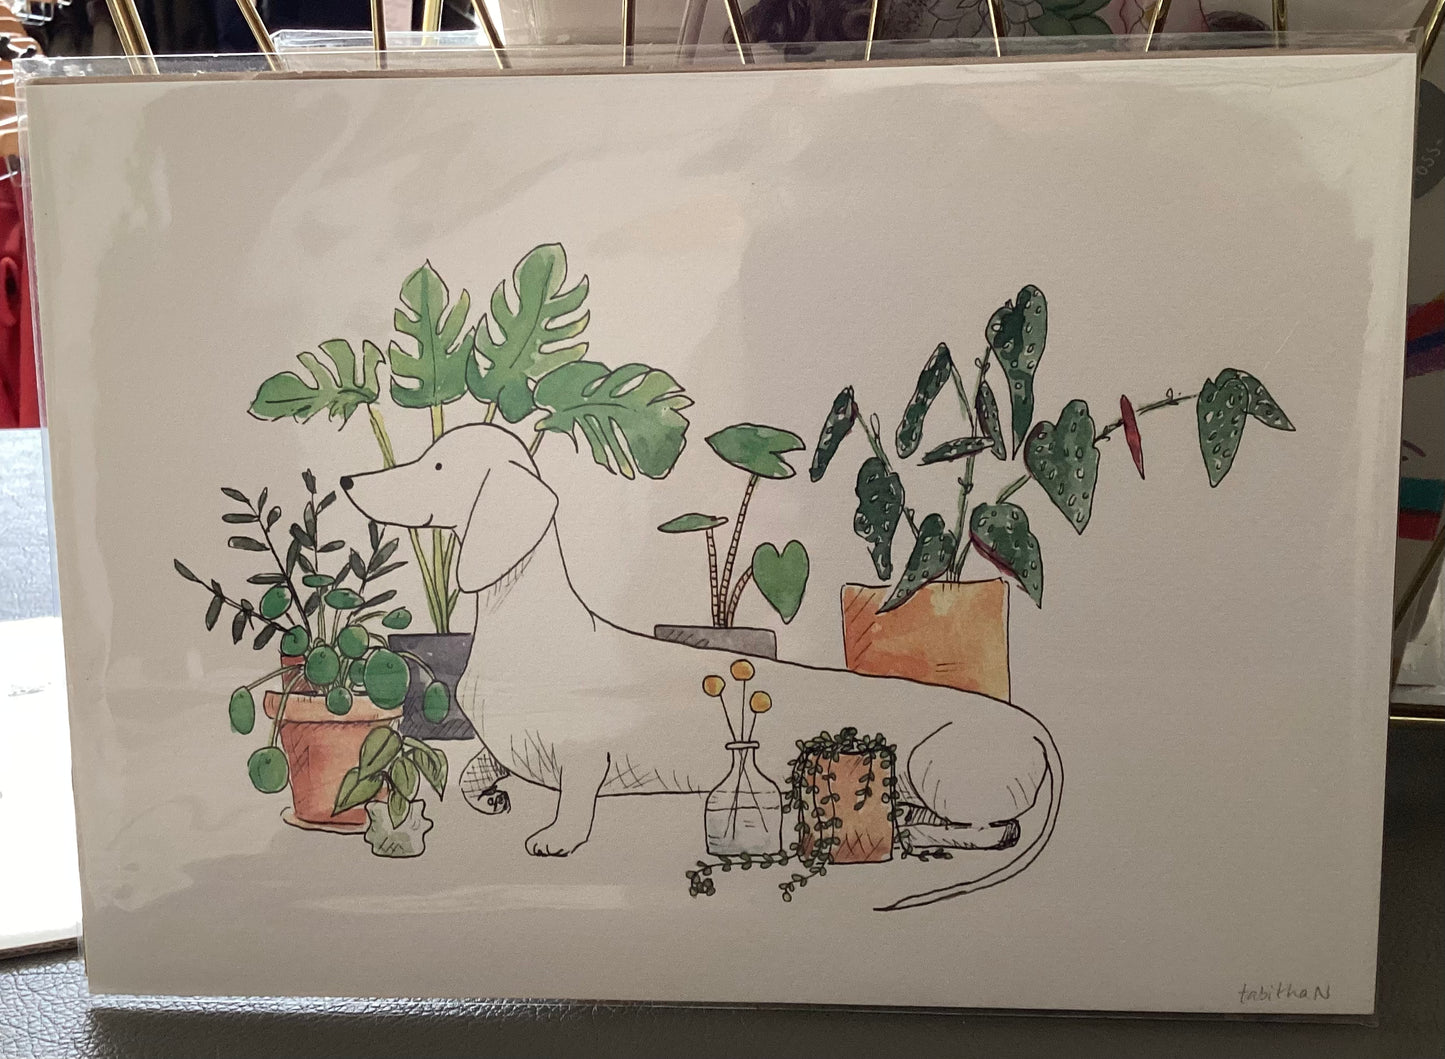 Tabitha Noakes ‘Dachshund and Plants’ A4 Print